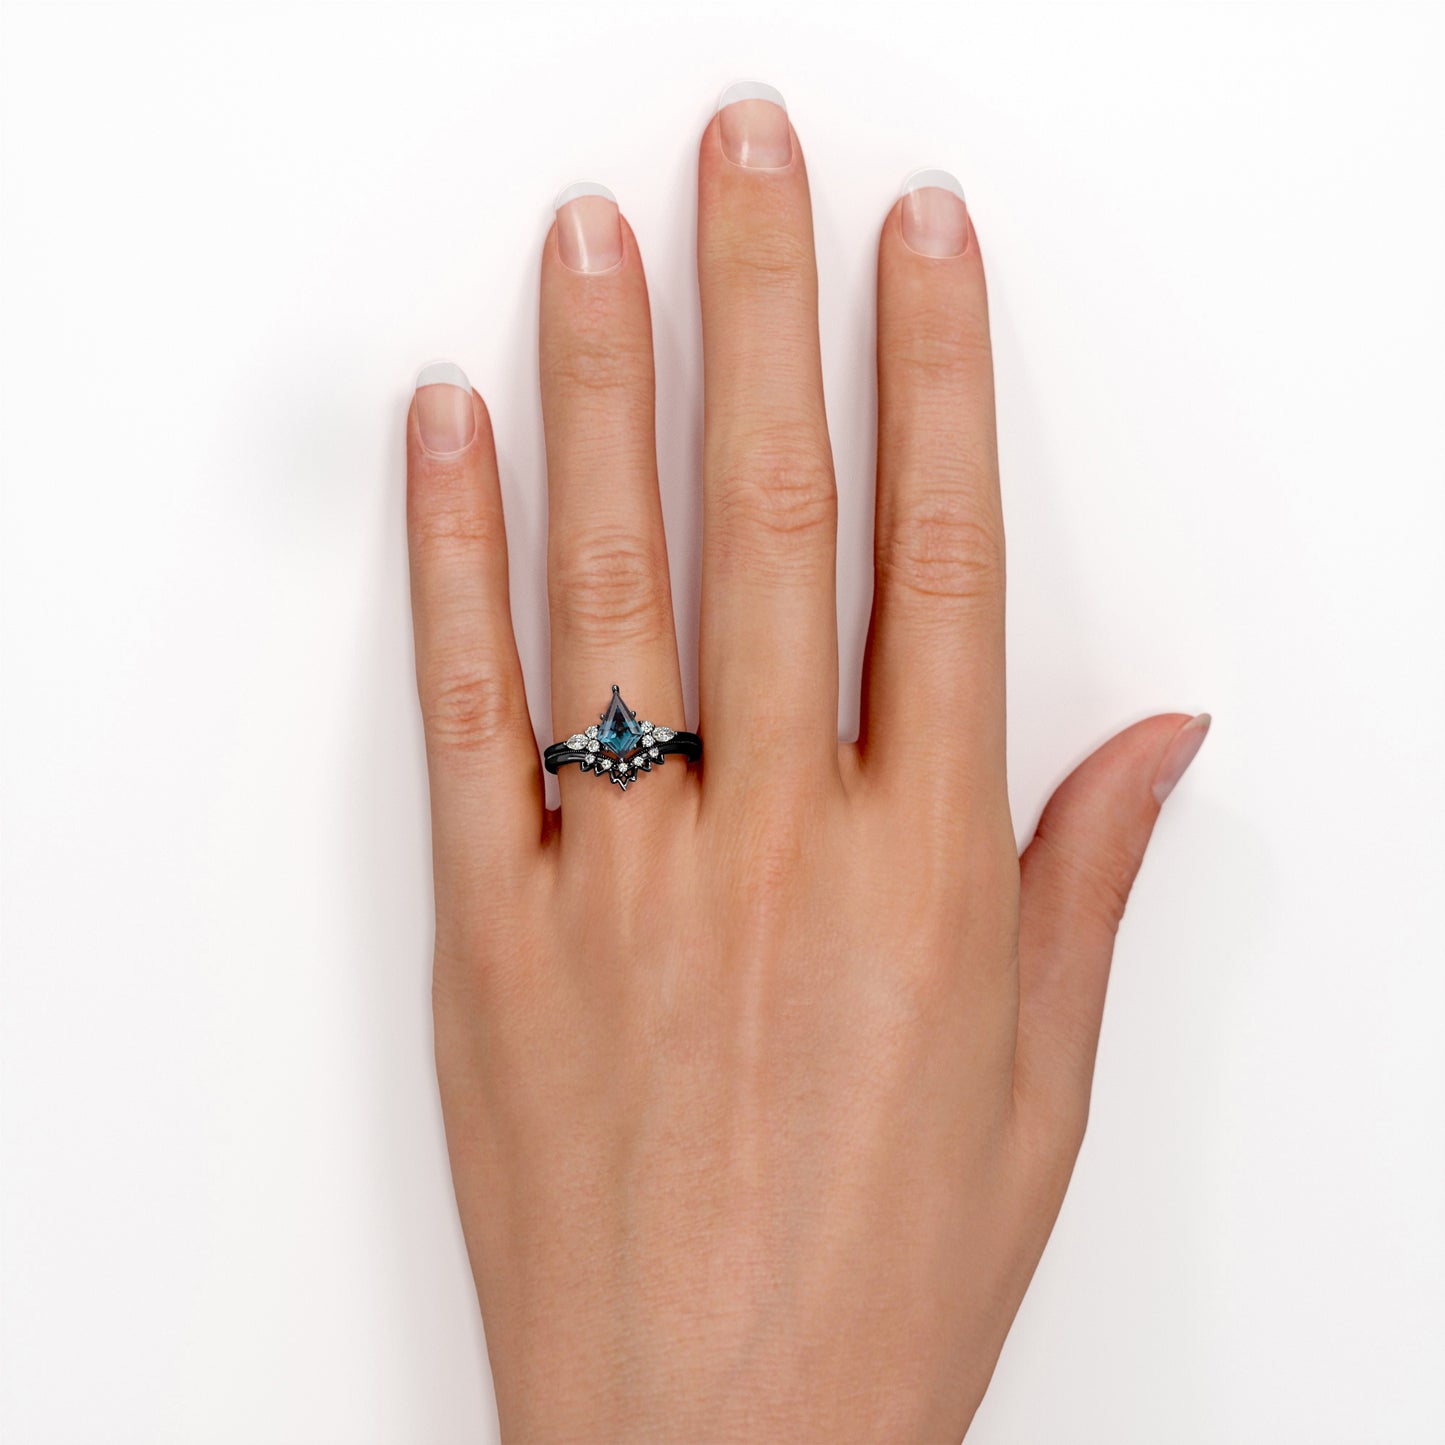 Chevron Milgrain 1.15 carat Kite shaped Lab made Alexandrite and diamond seven stone wedding ring set for women in Black gold